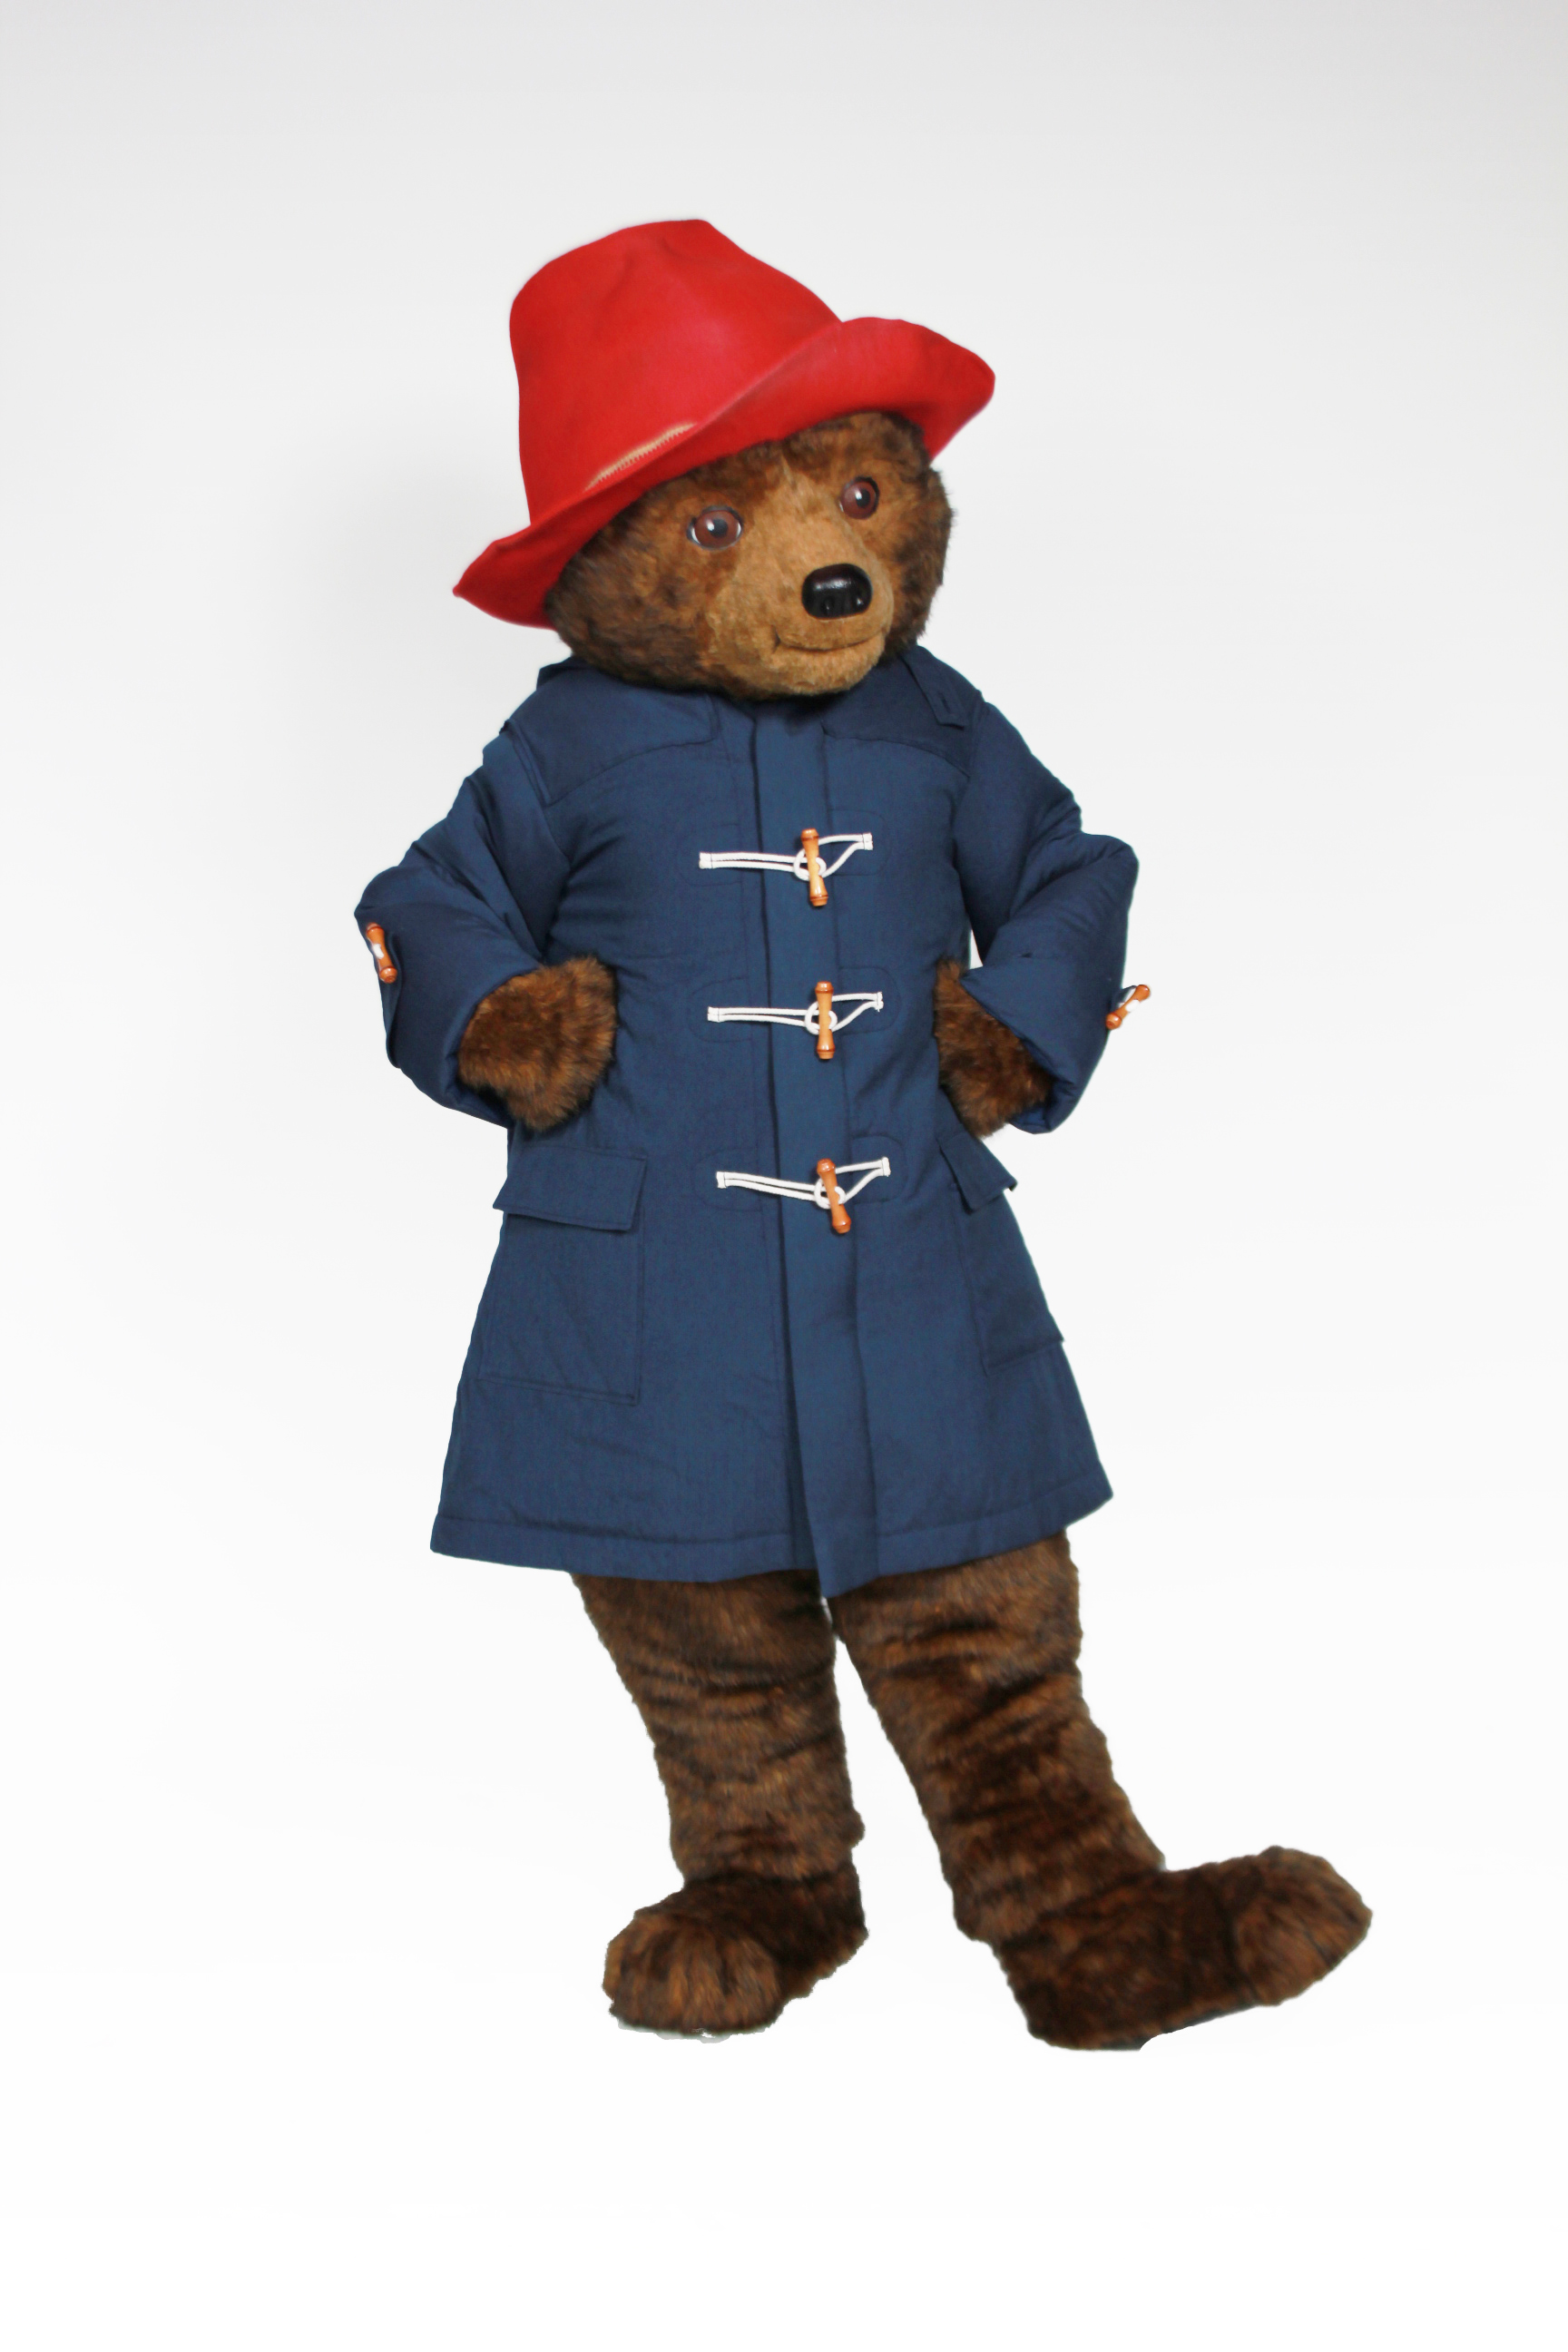 paddington-bear-character-rental-custom-mascots-costume-specialists